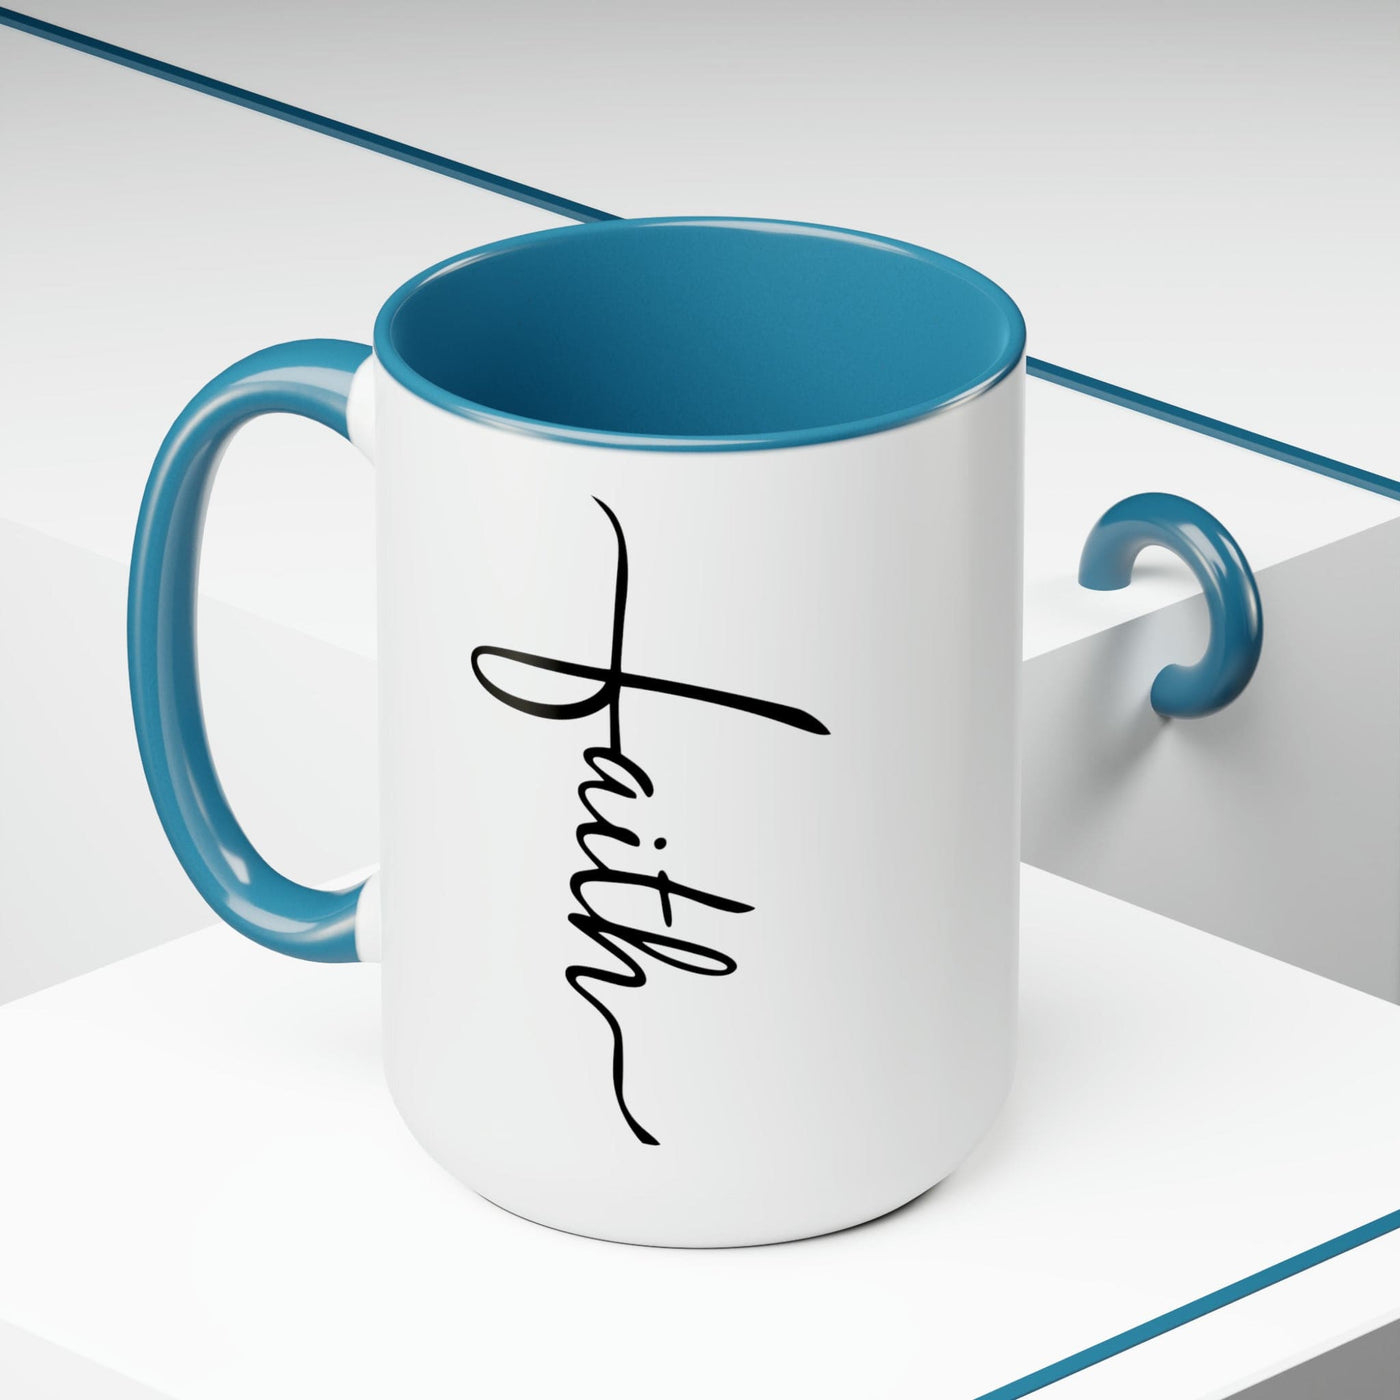 Accent Ceramic Coffee Mug 15oz - Faith Script Cross Black Illustration -